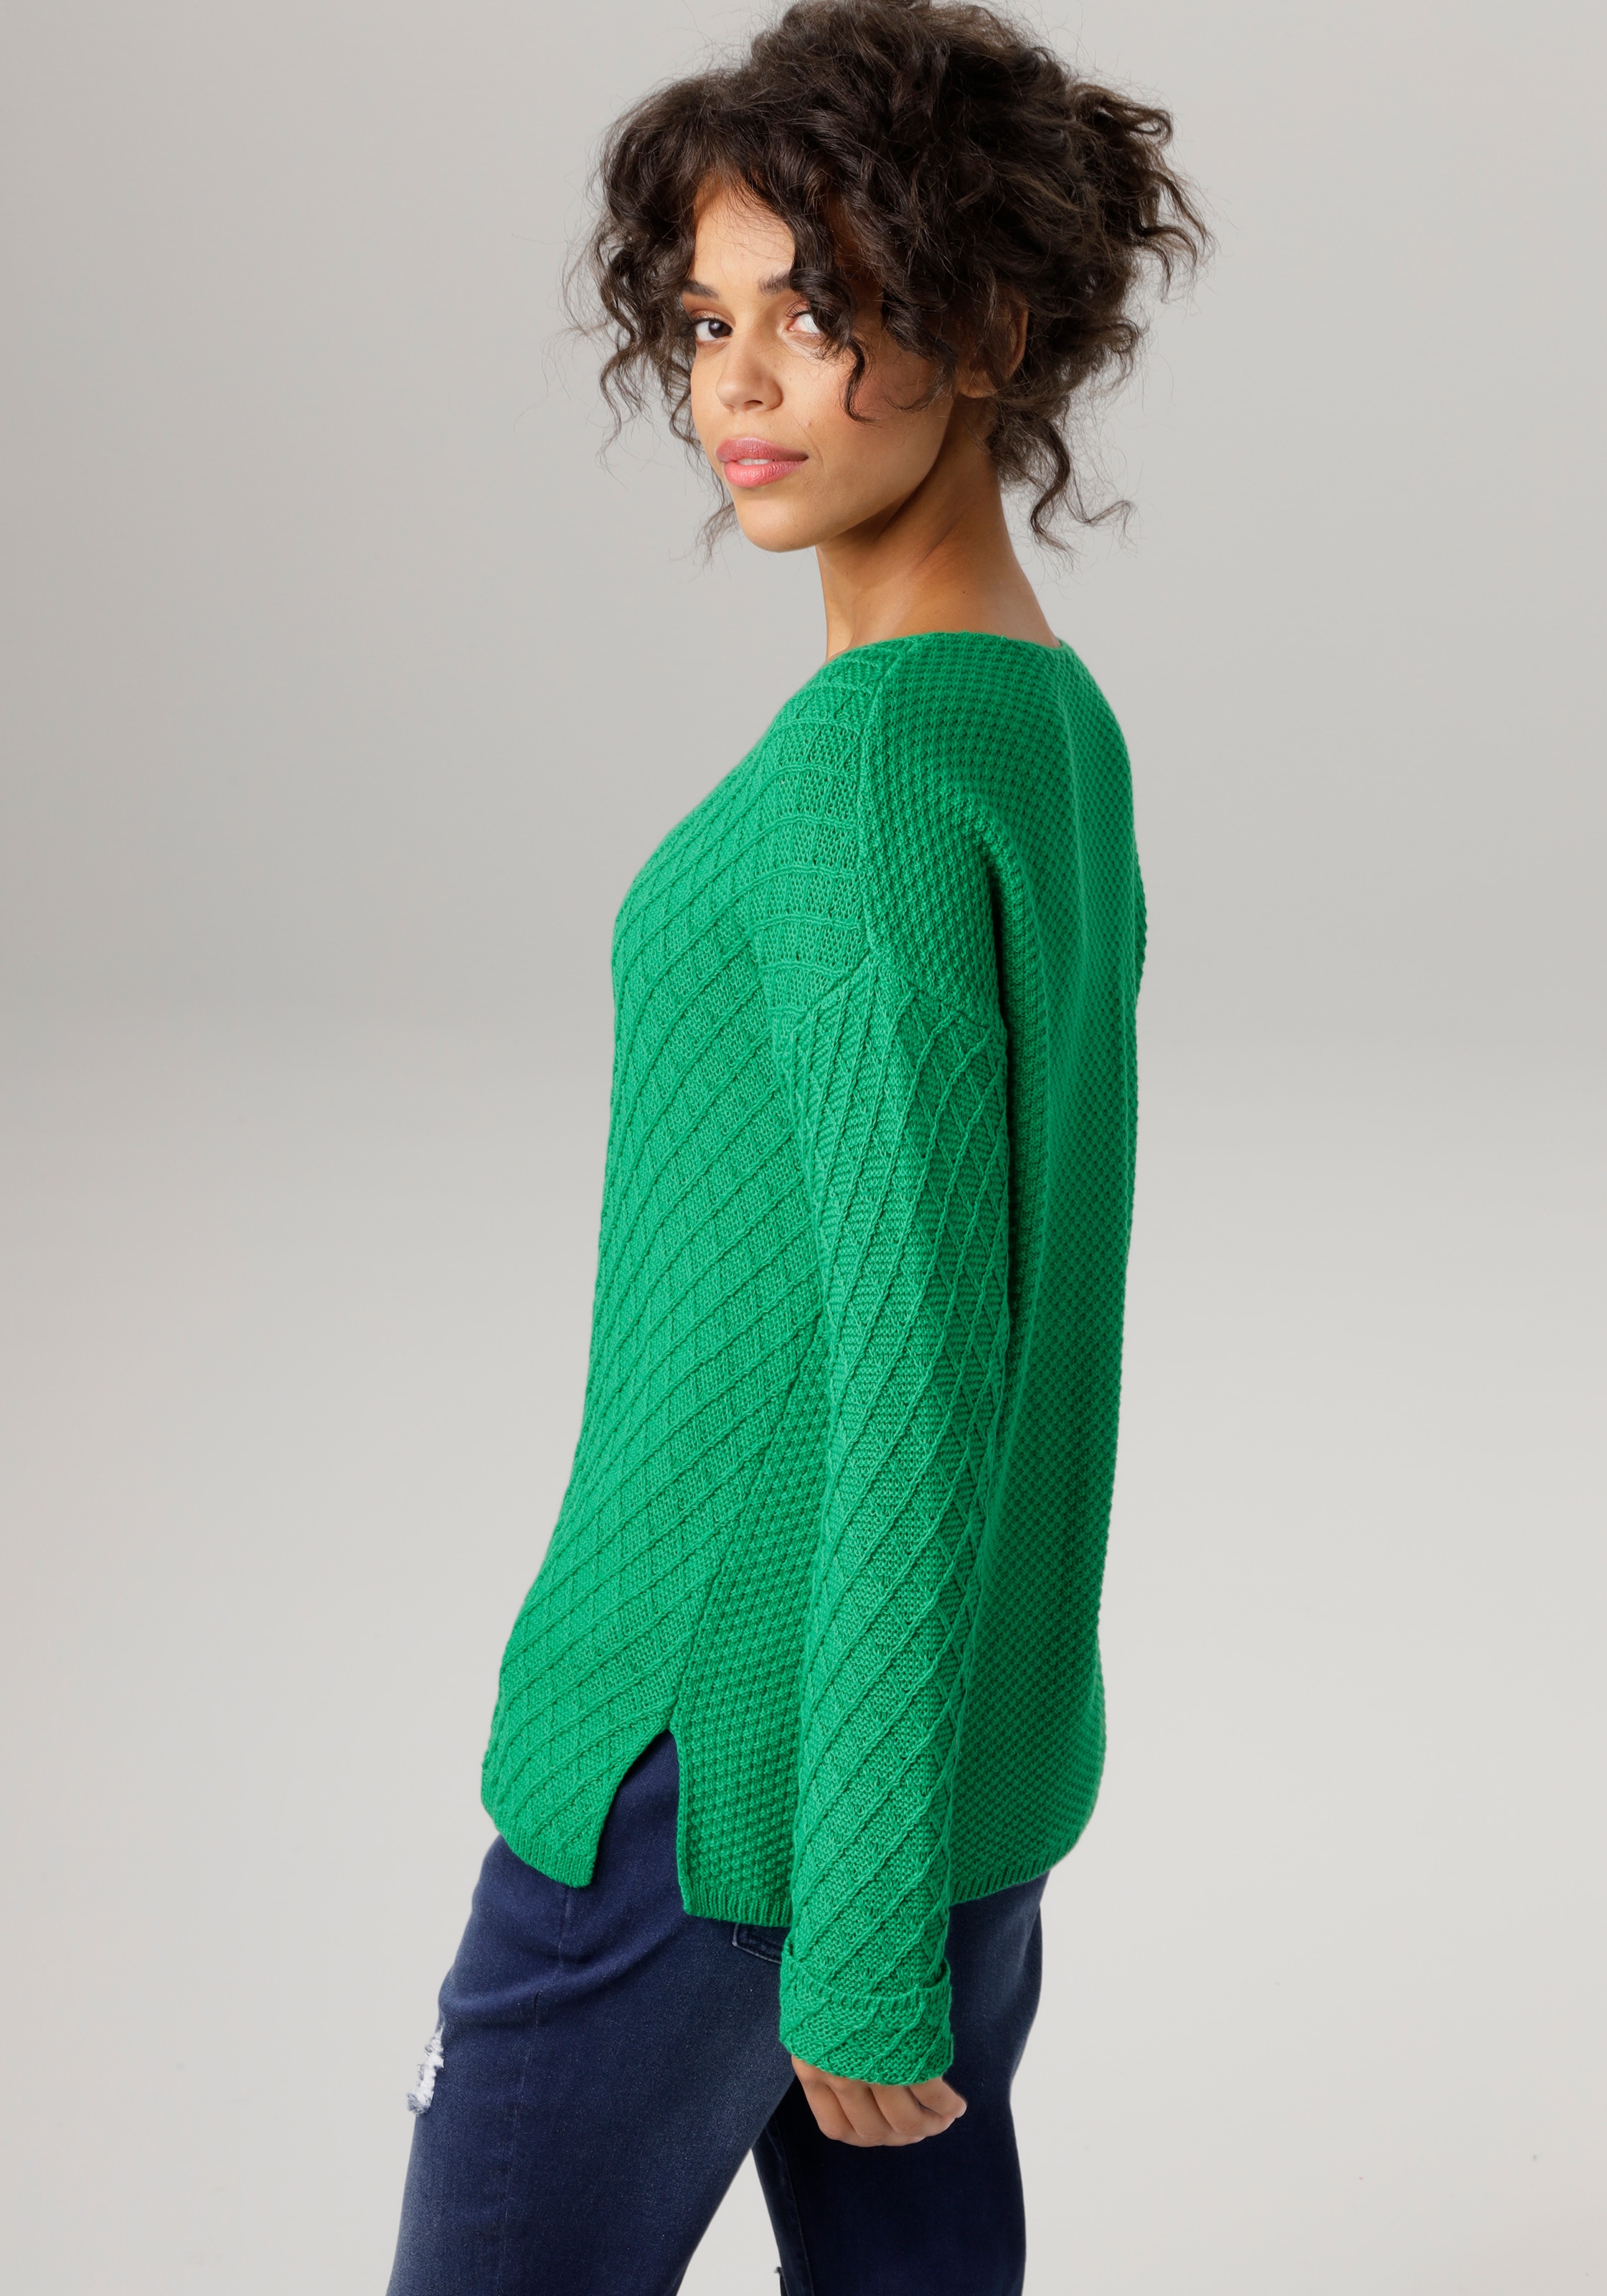 Aniston CASUAL V-Ausschnitt-Pullover, im trendigen Mustermix